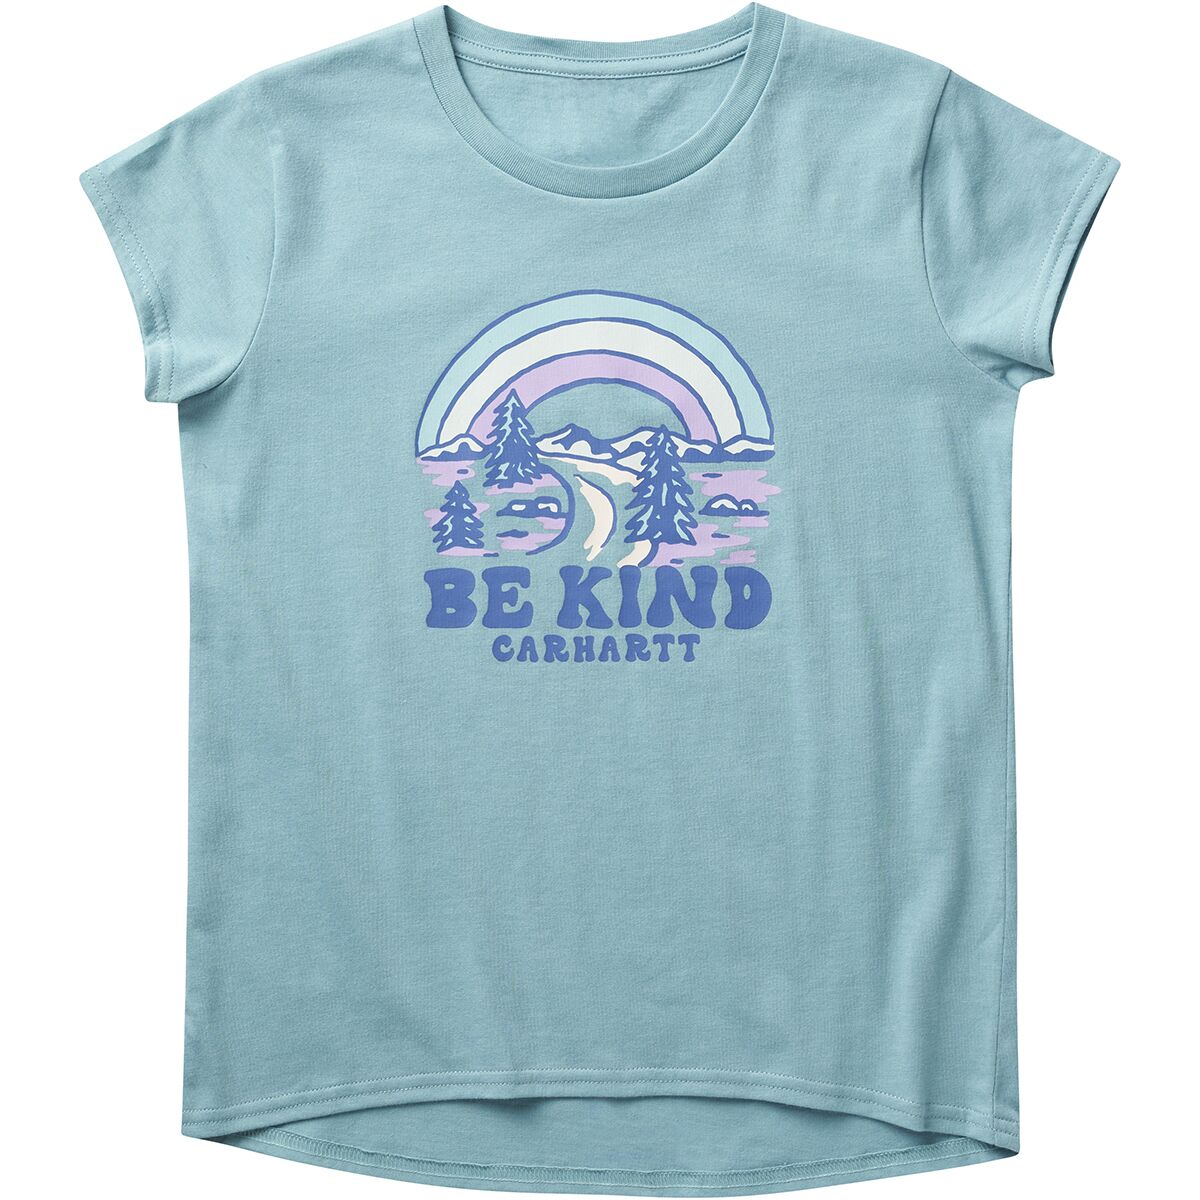 Carhartt Be Kind Short-Sleeve Graphic T-Shirt - Girls'